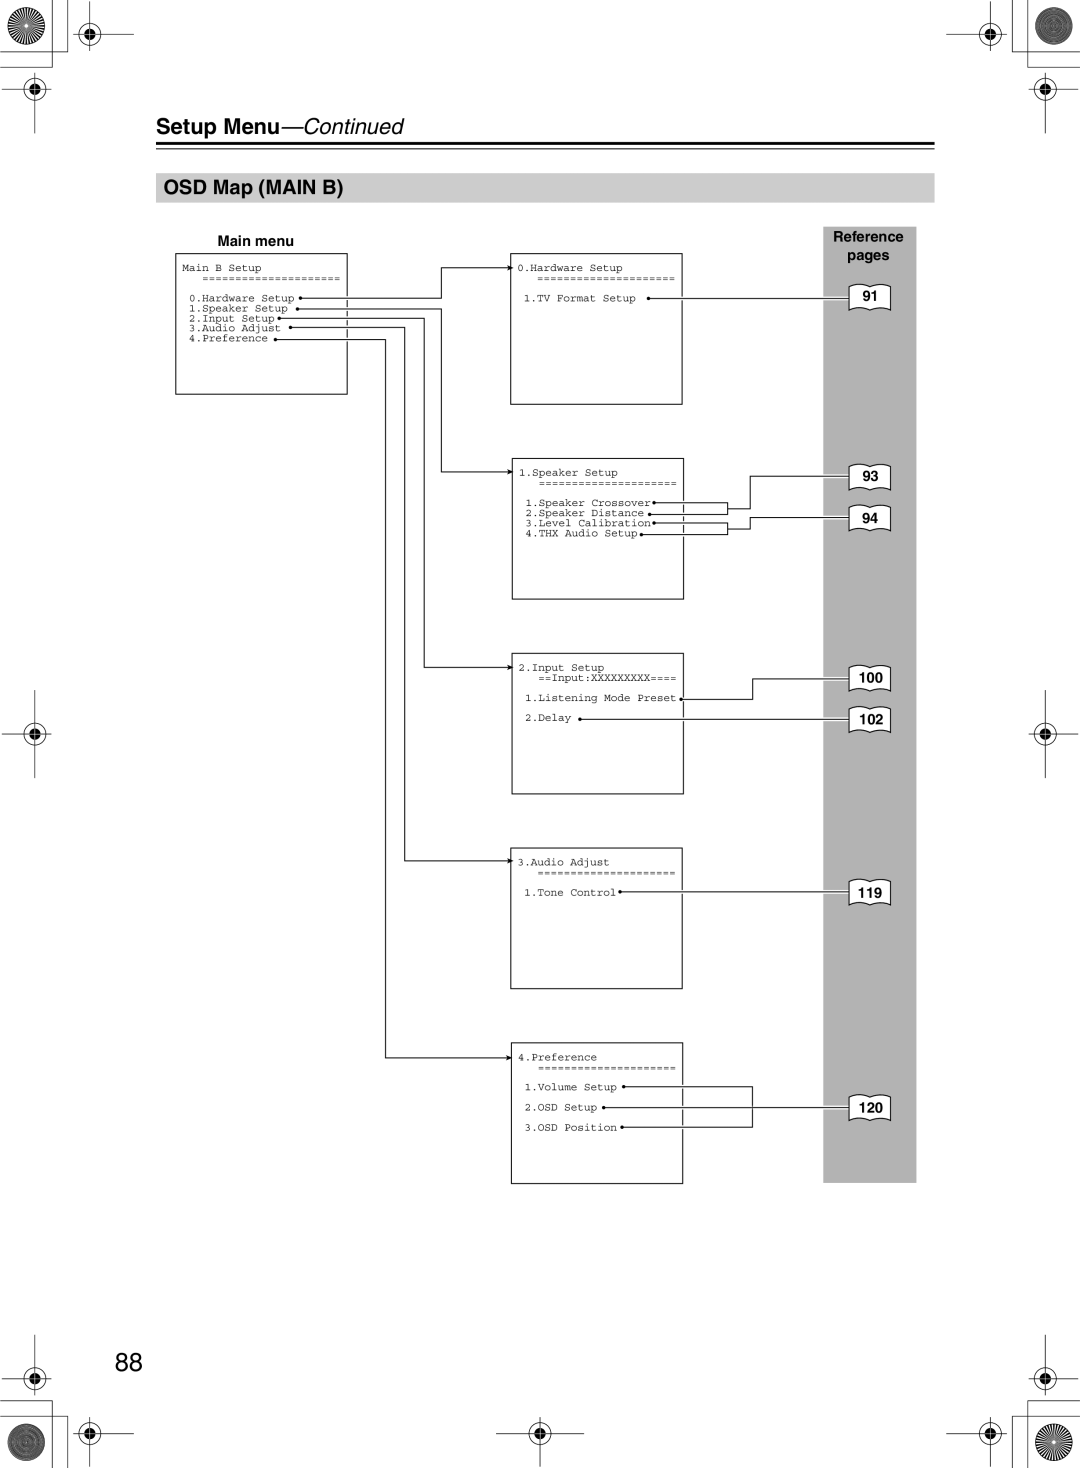 Integra RDC-7.1 instruction manual OSD Map MAIN B, Setup Menu—Continued, Main menu, Reference pages 91 93 94, 100 102 